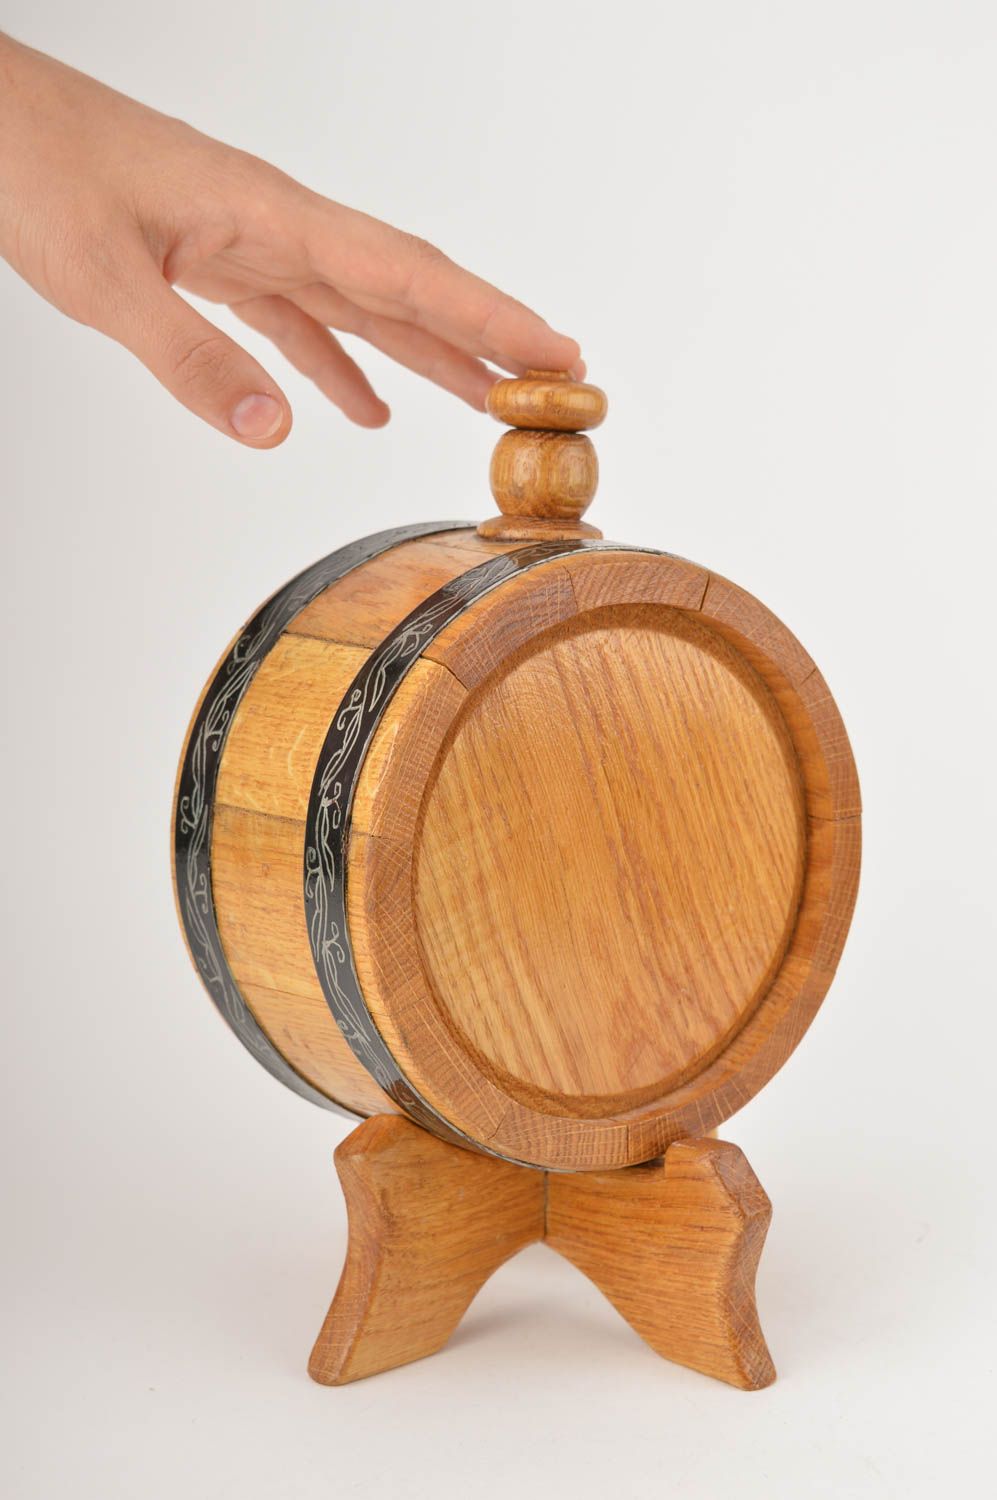 Handmade wooden barrel wine barrel wood decor interior barrel present for fiend photo 4